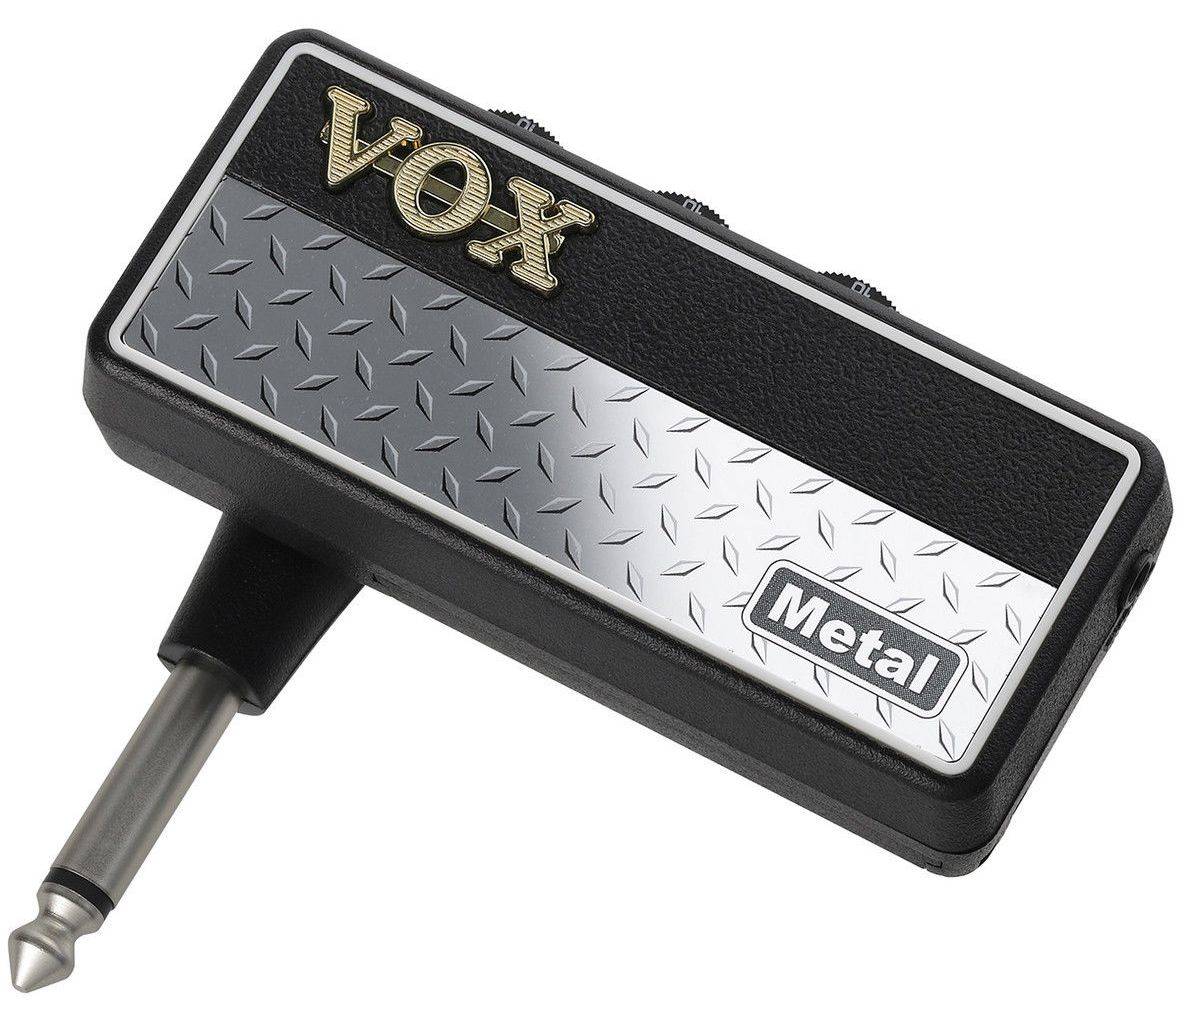 Vox AP2-MT amPlug 2 Metal по цене 5 800 ₽